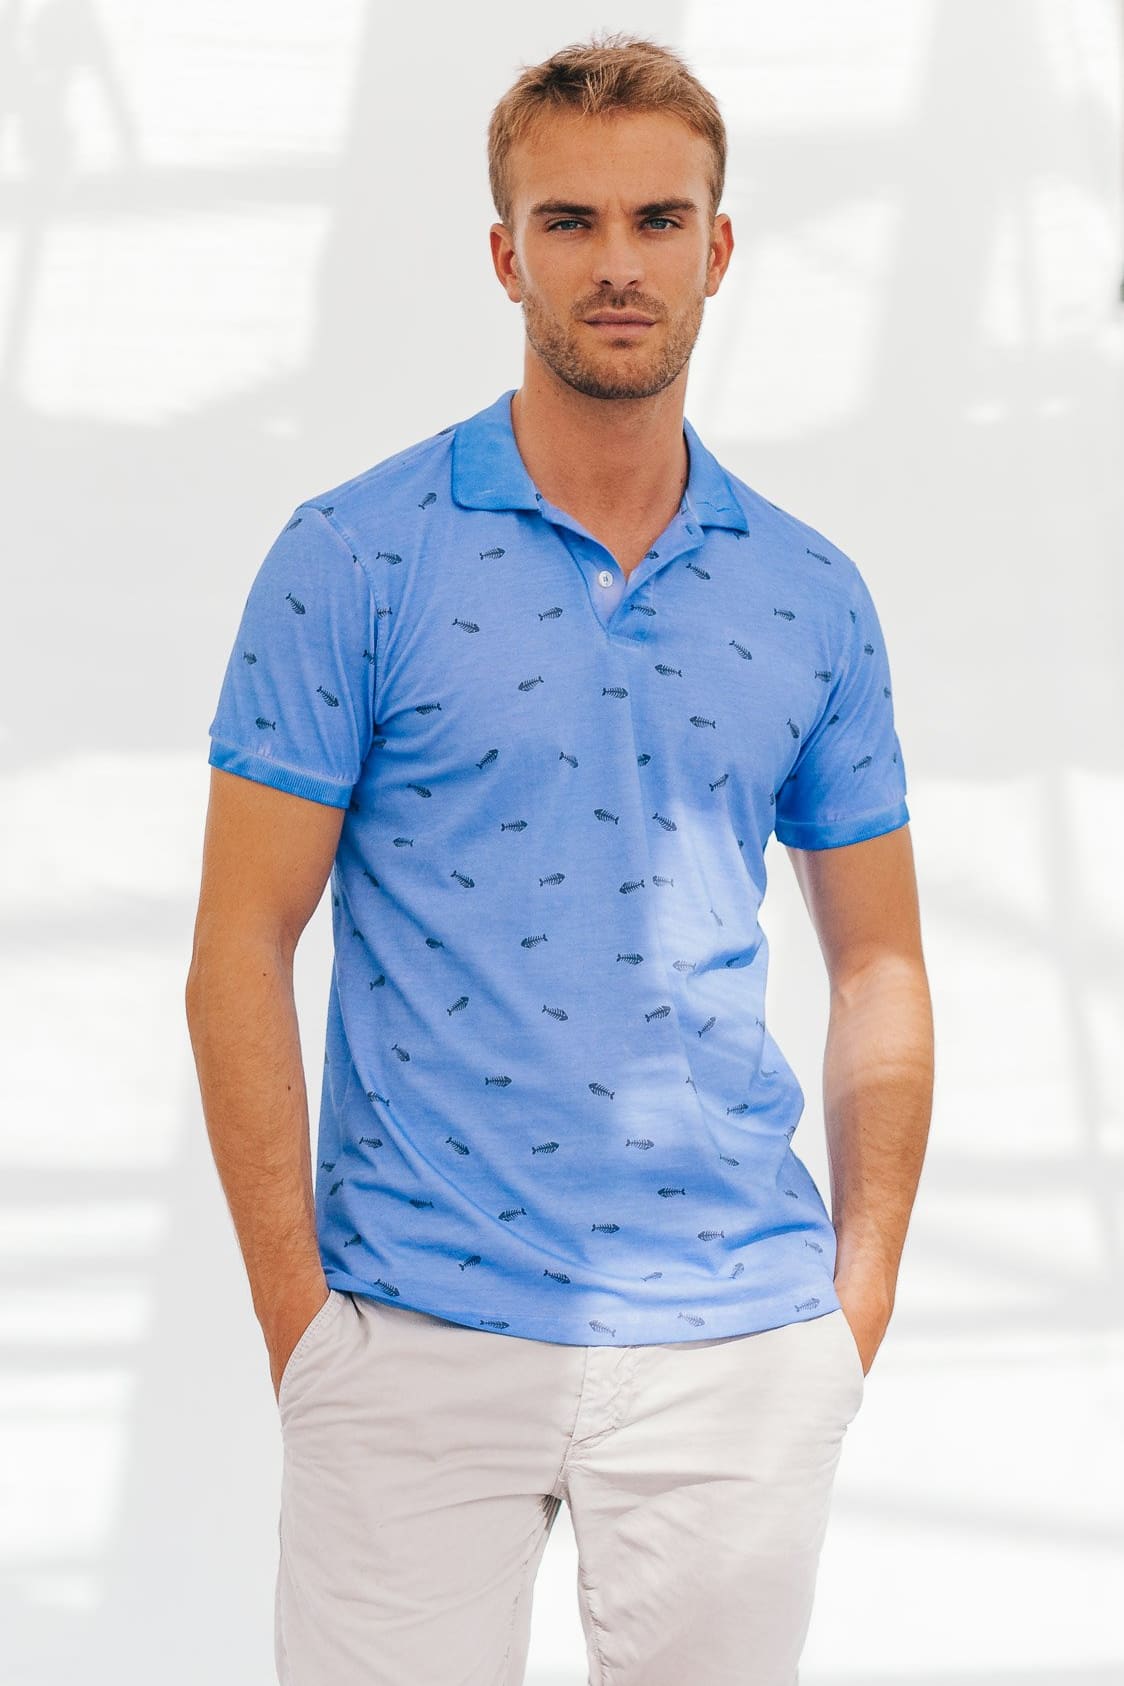 Fishbone Patterned Polo Shirt - Oceano - Polos